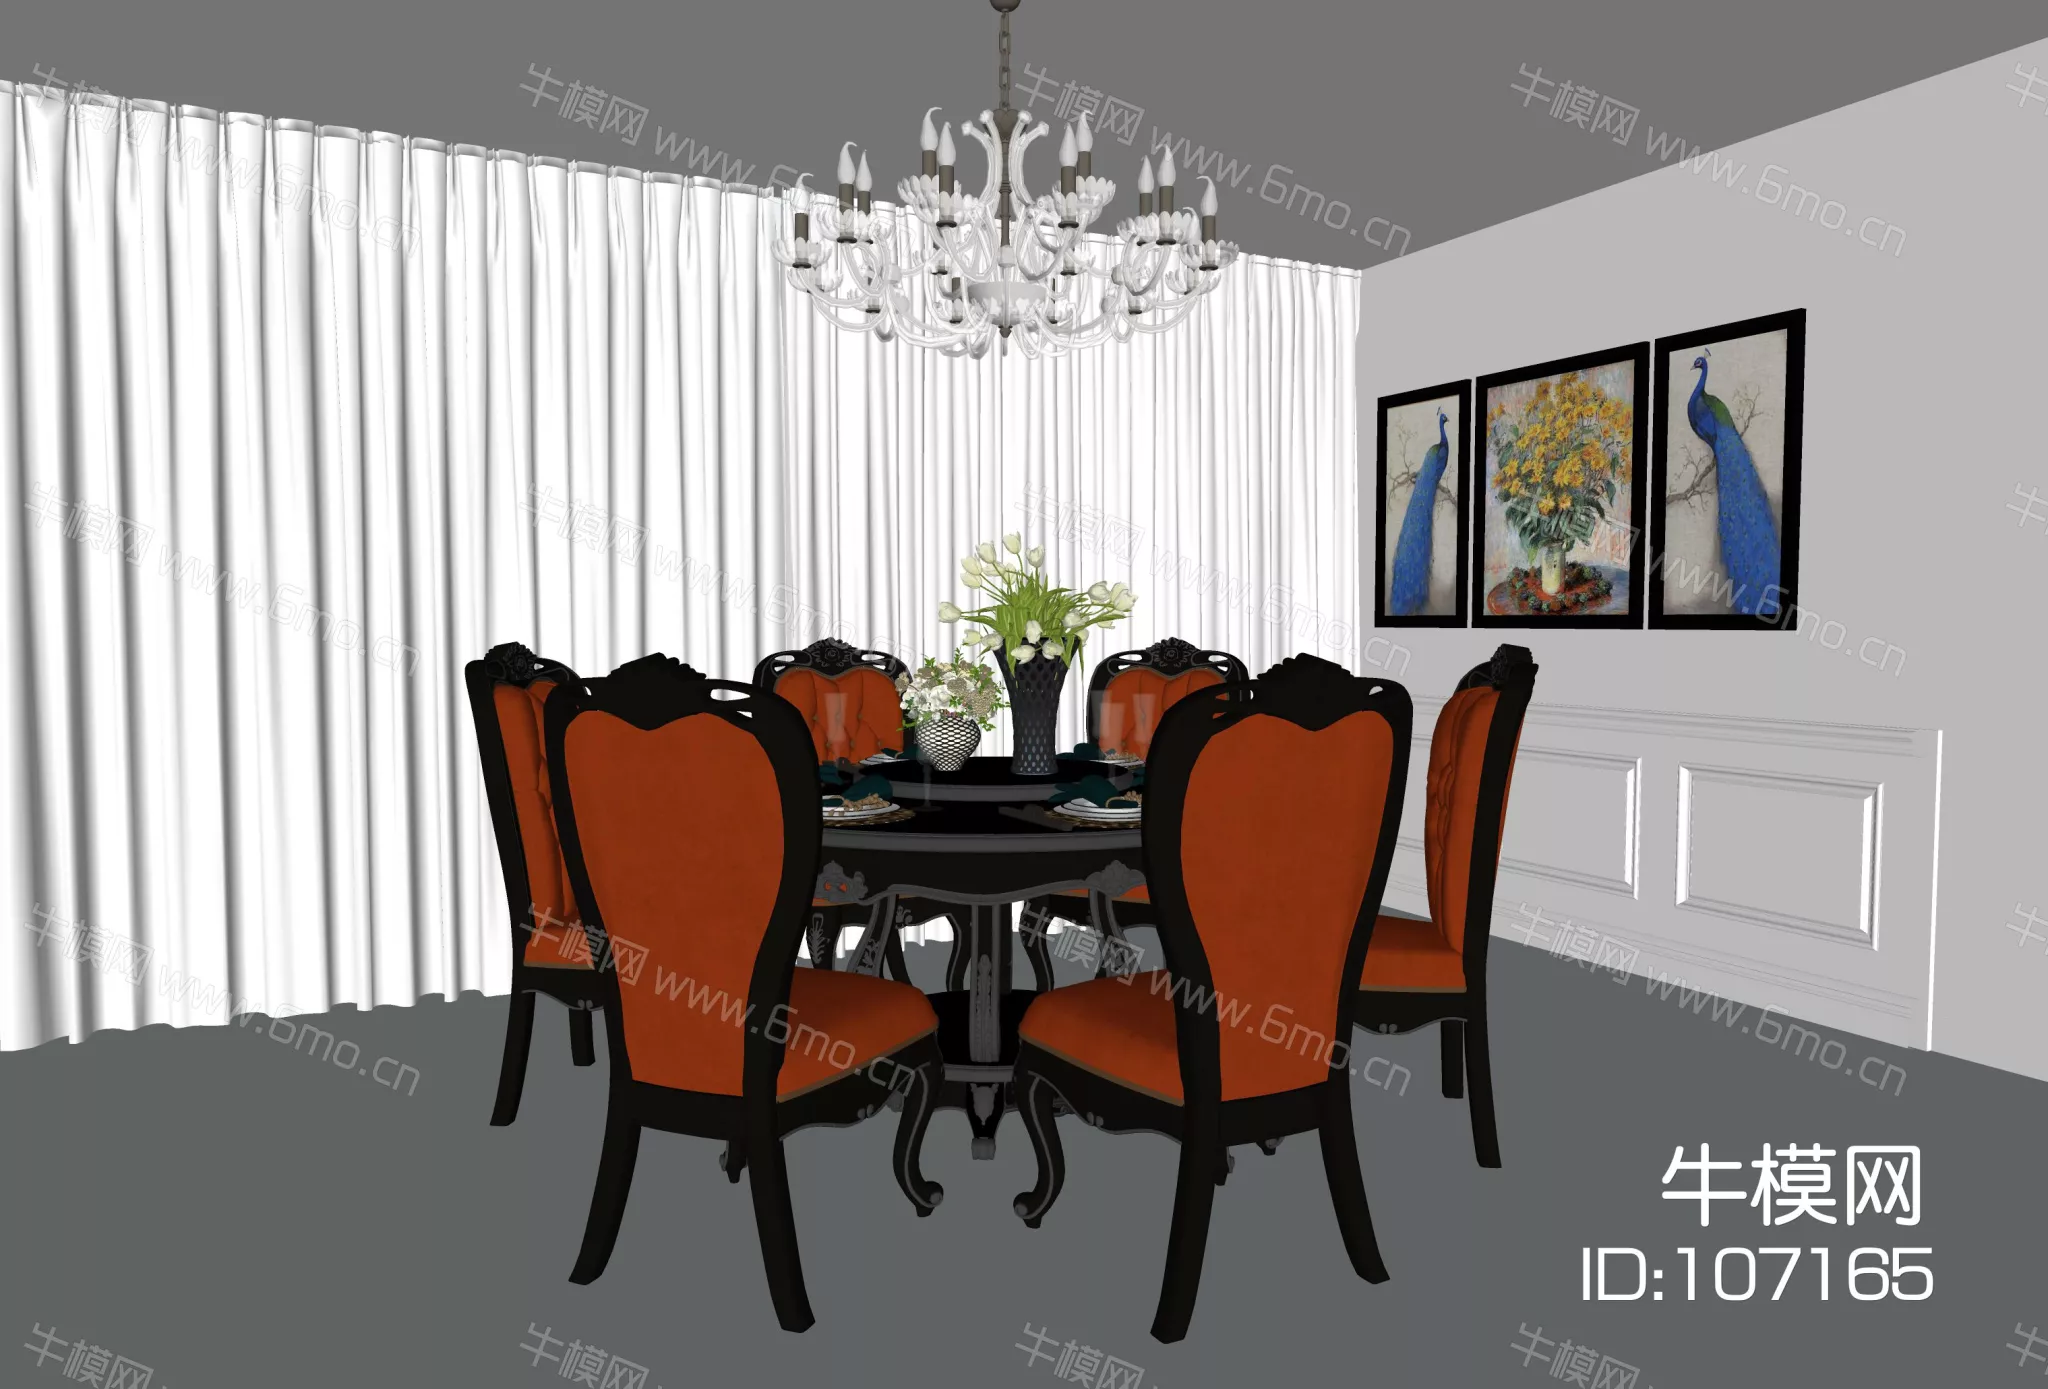 AMERICAN DINING TABLE SET - SKETCHUP 3D MODEL - ENSCAPE - 107165